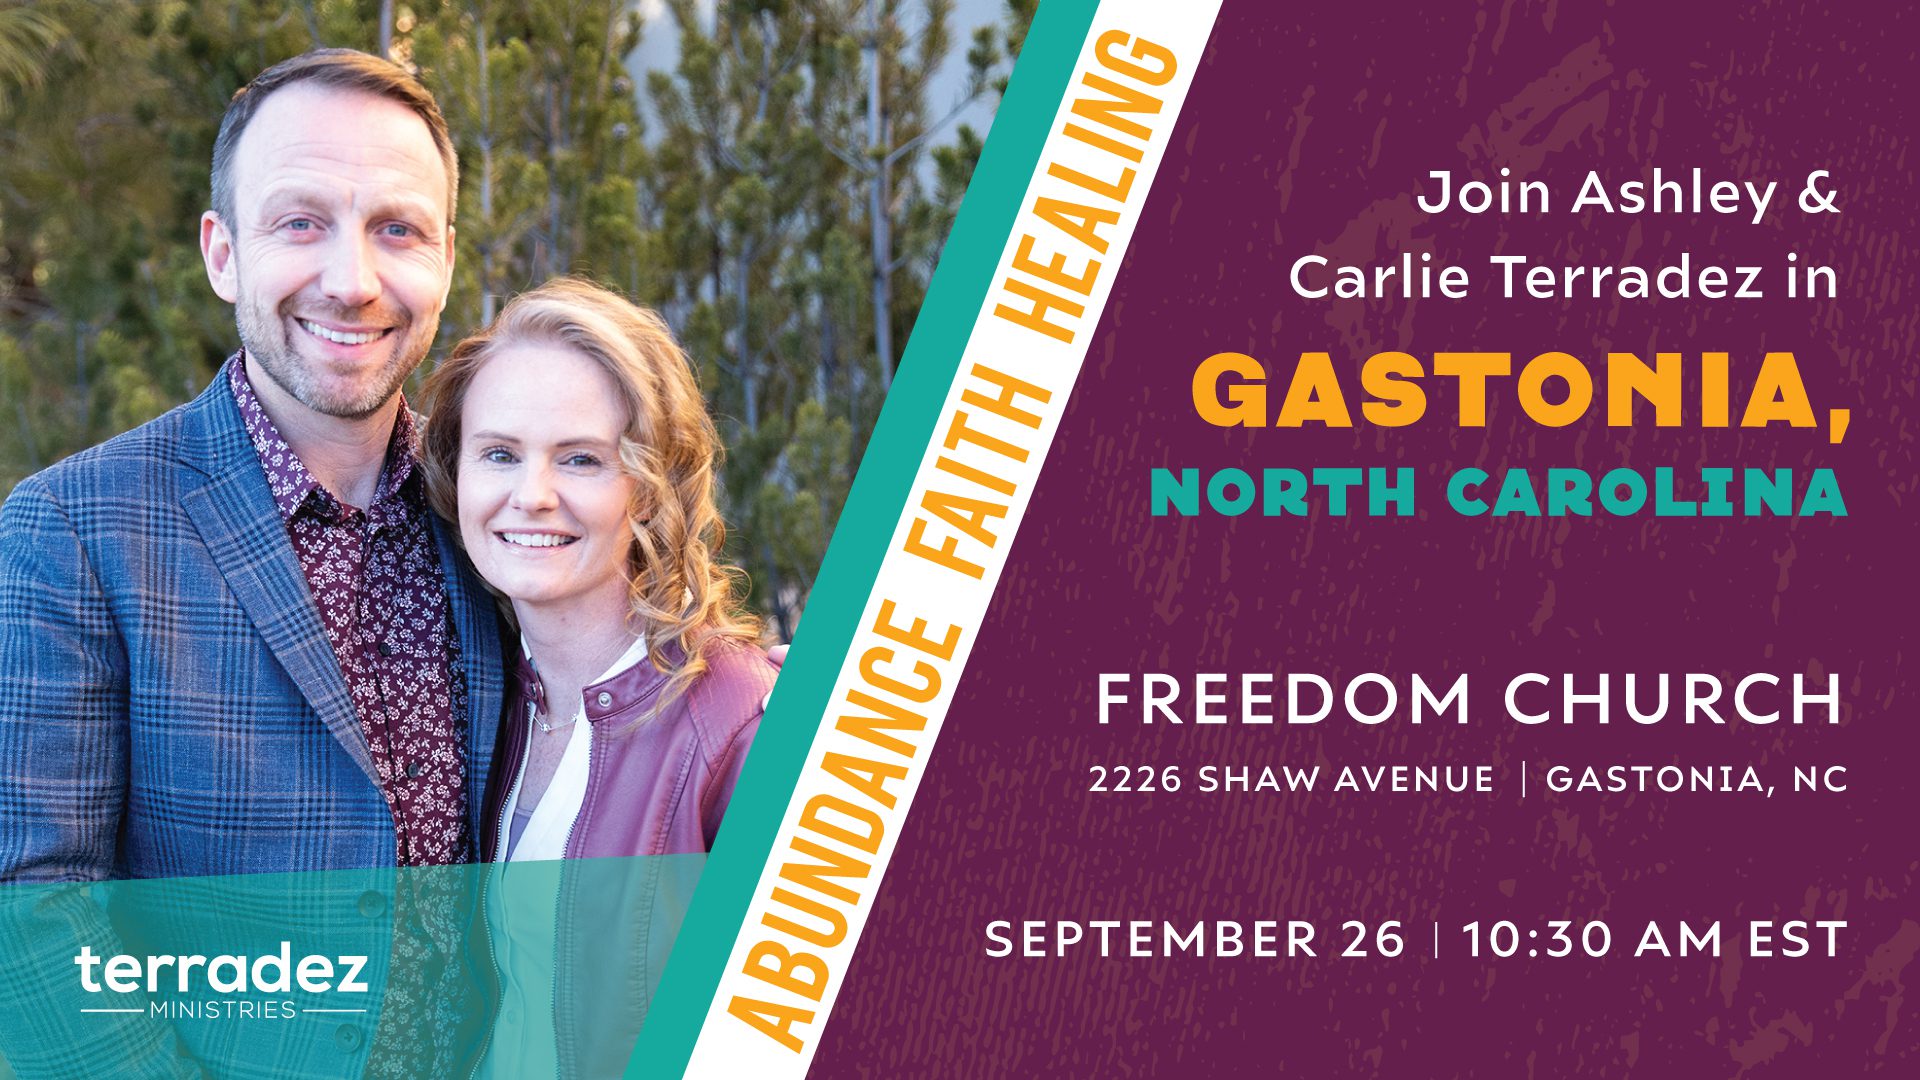 Ashley and Carlie Terradez speaking at Freedom Church Gastonia on Sunday, Sept ember 26, 2021.